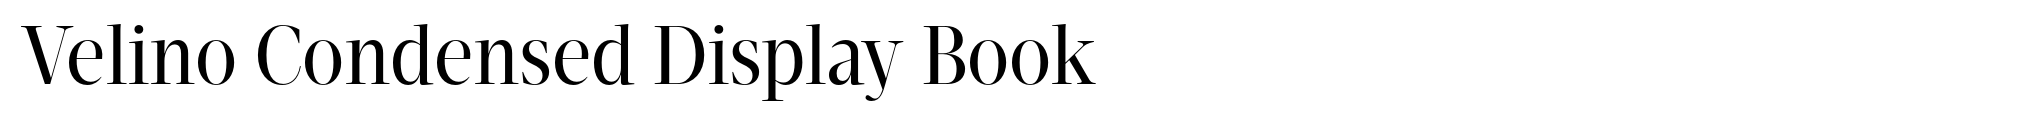 Velino Condensed Display Book image